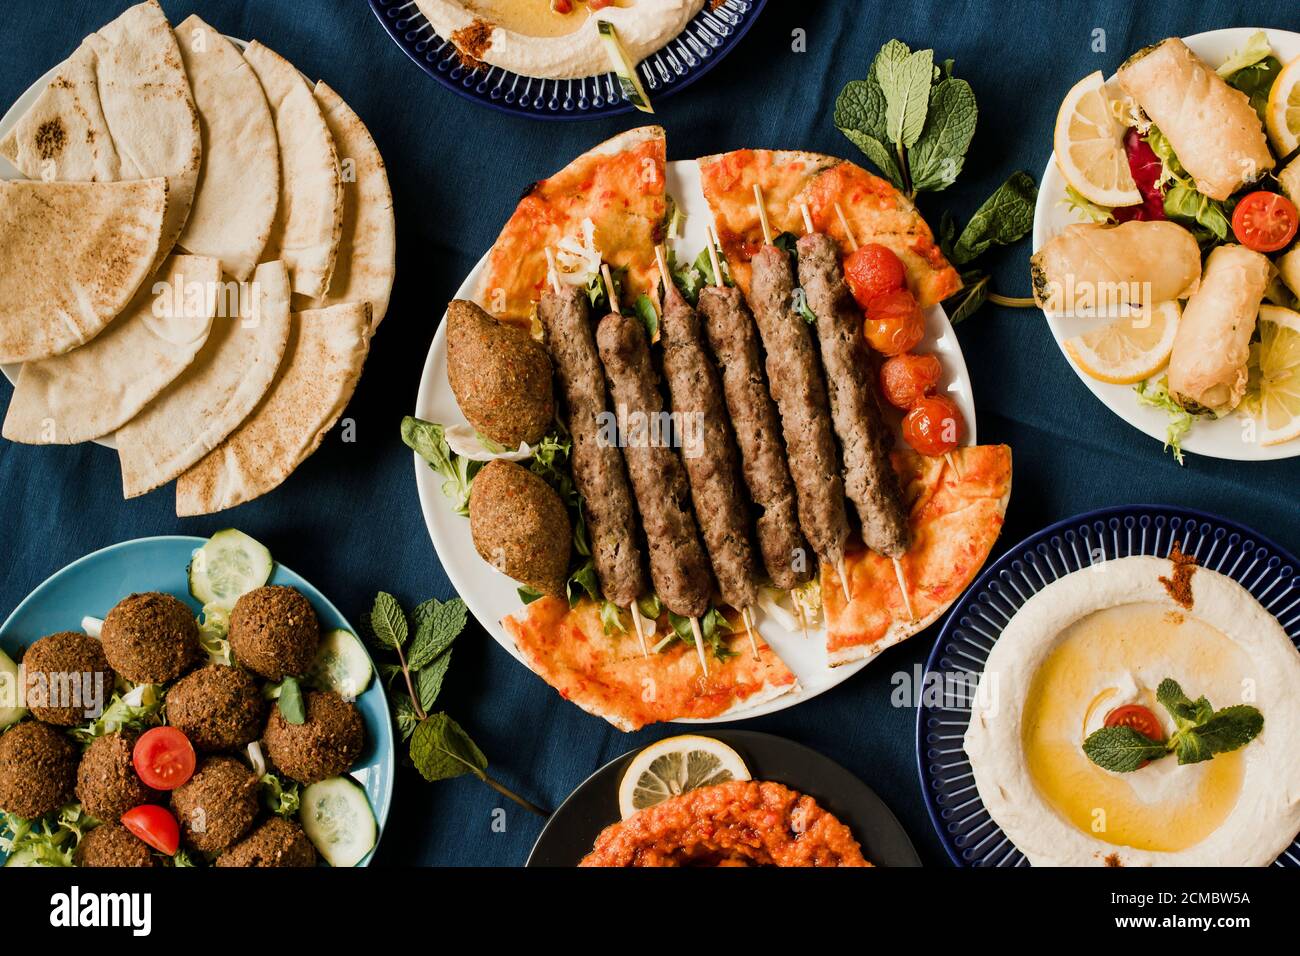 Traditional Arab cuisine including kebab meat, kibbeh, mutabal, falafel, muhammara, pita bread and hummus Stock Photo